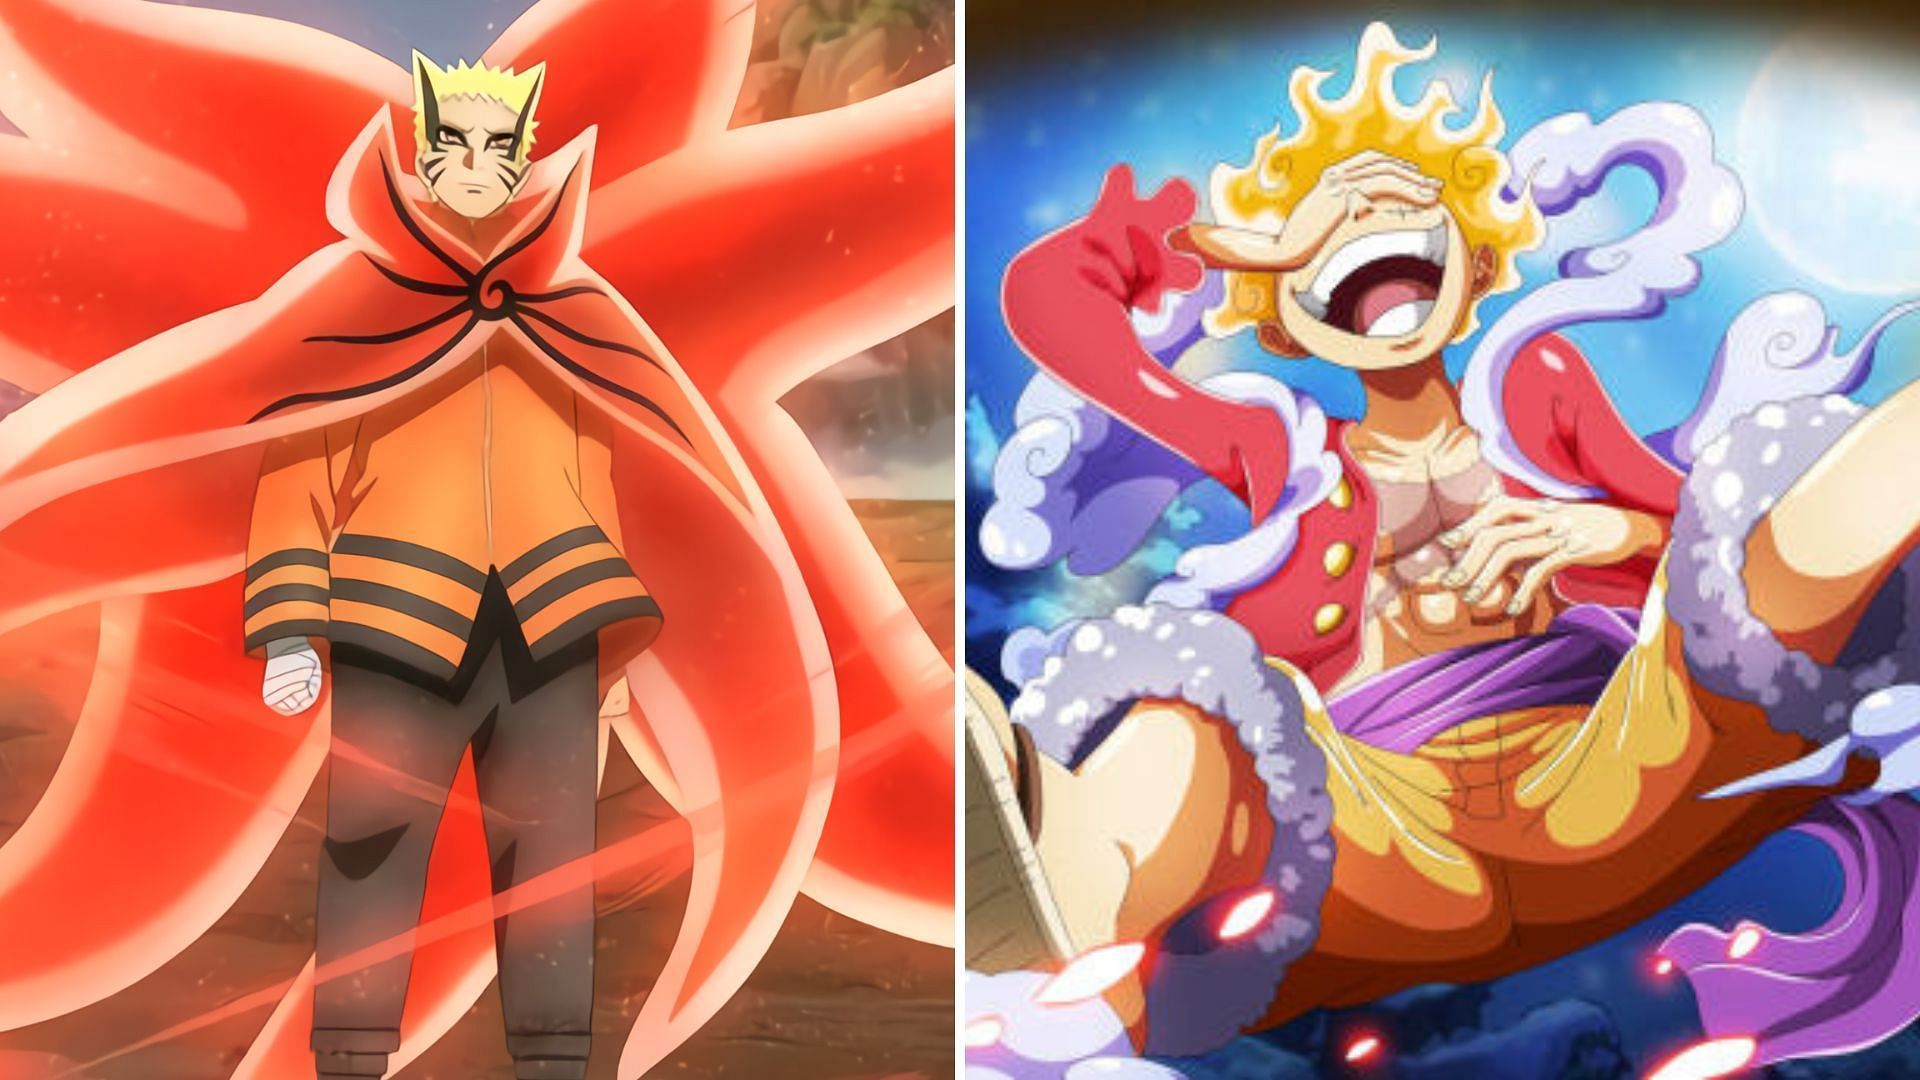 Comparing Baryon Mode Naruto and Gear 5 Luffy (Image via Sportskeeda)